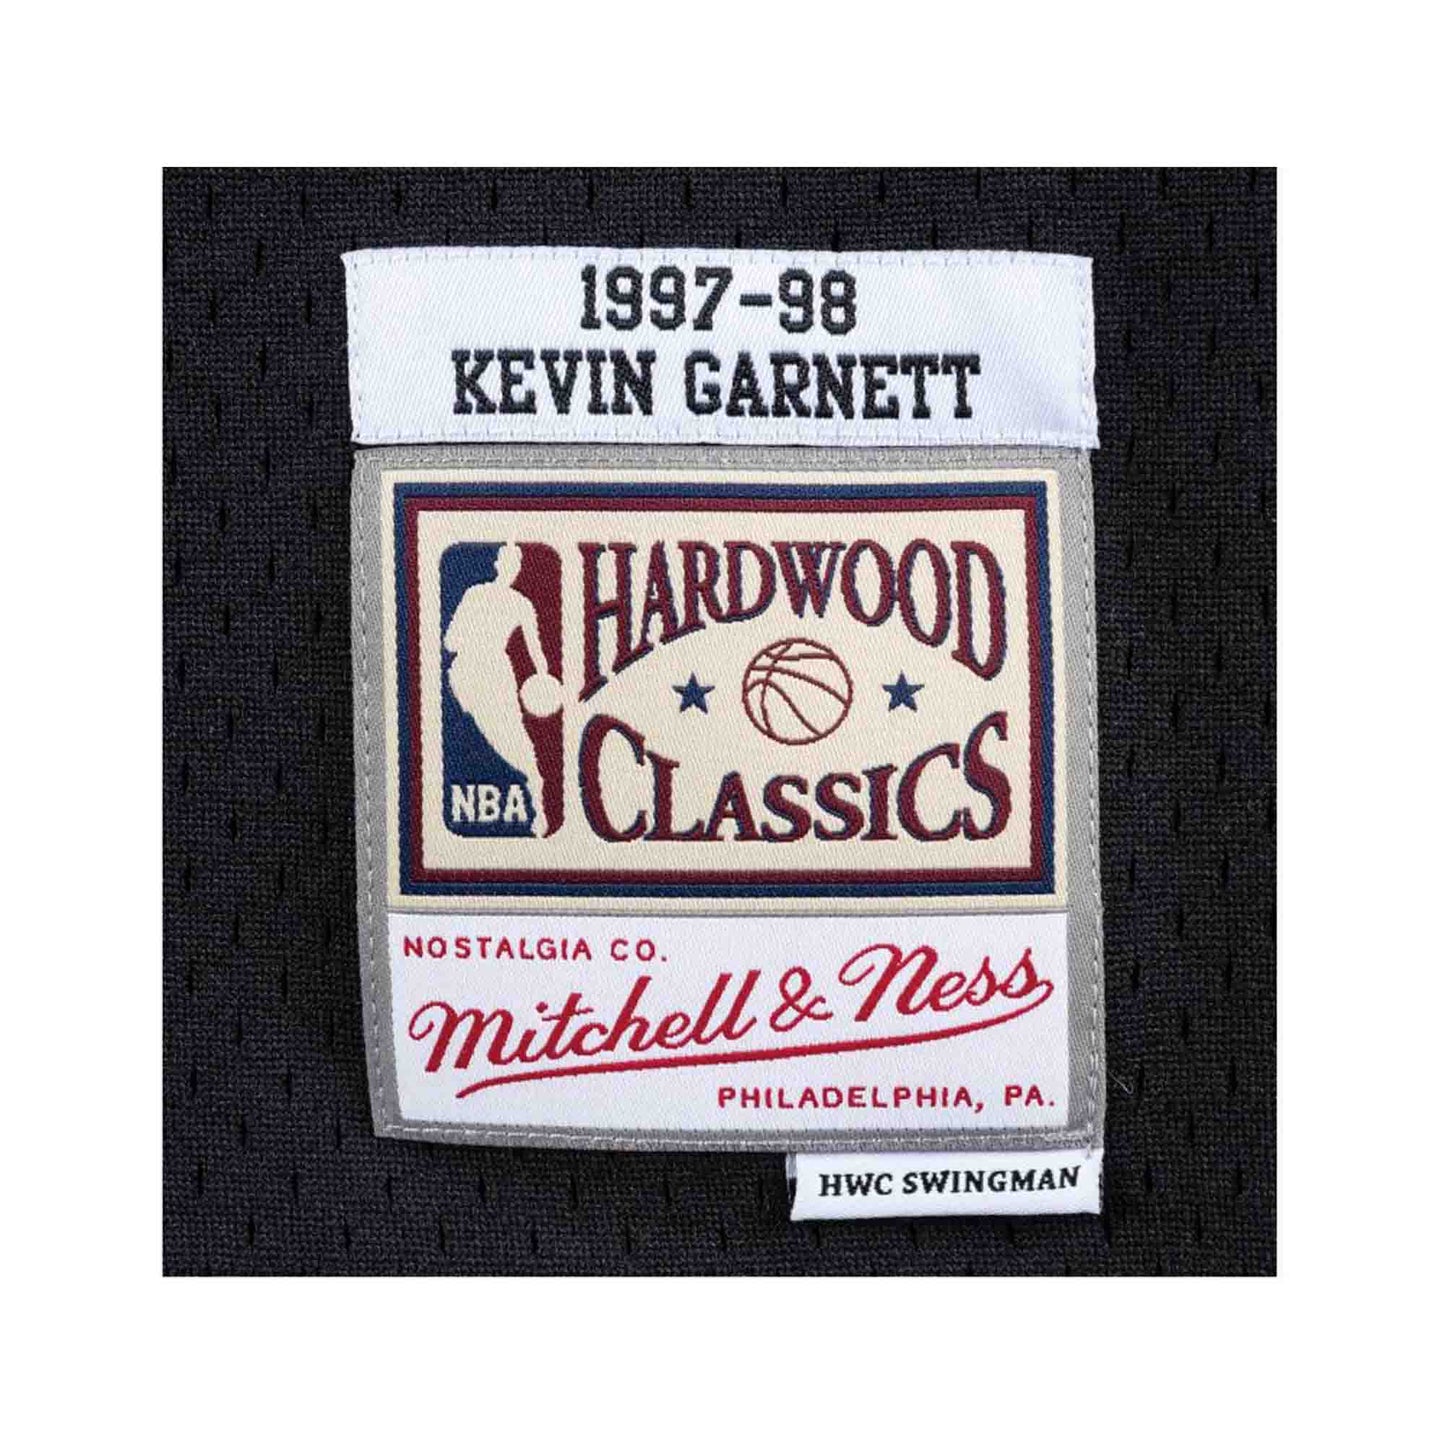 Minnesota Timberwolves Basketball Jersey Blue Classic #21 Kevin